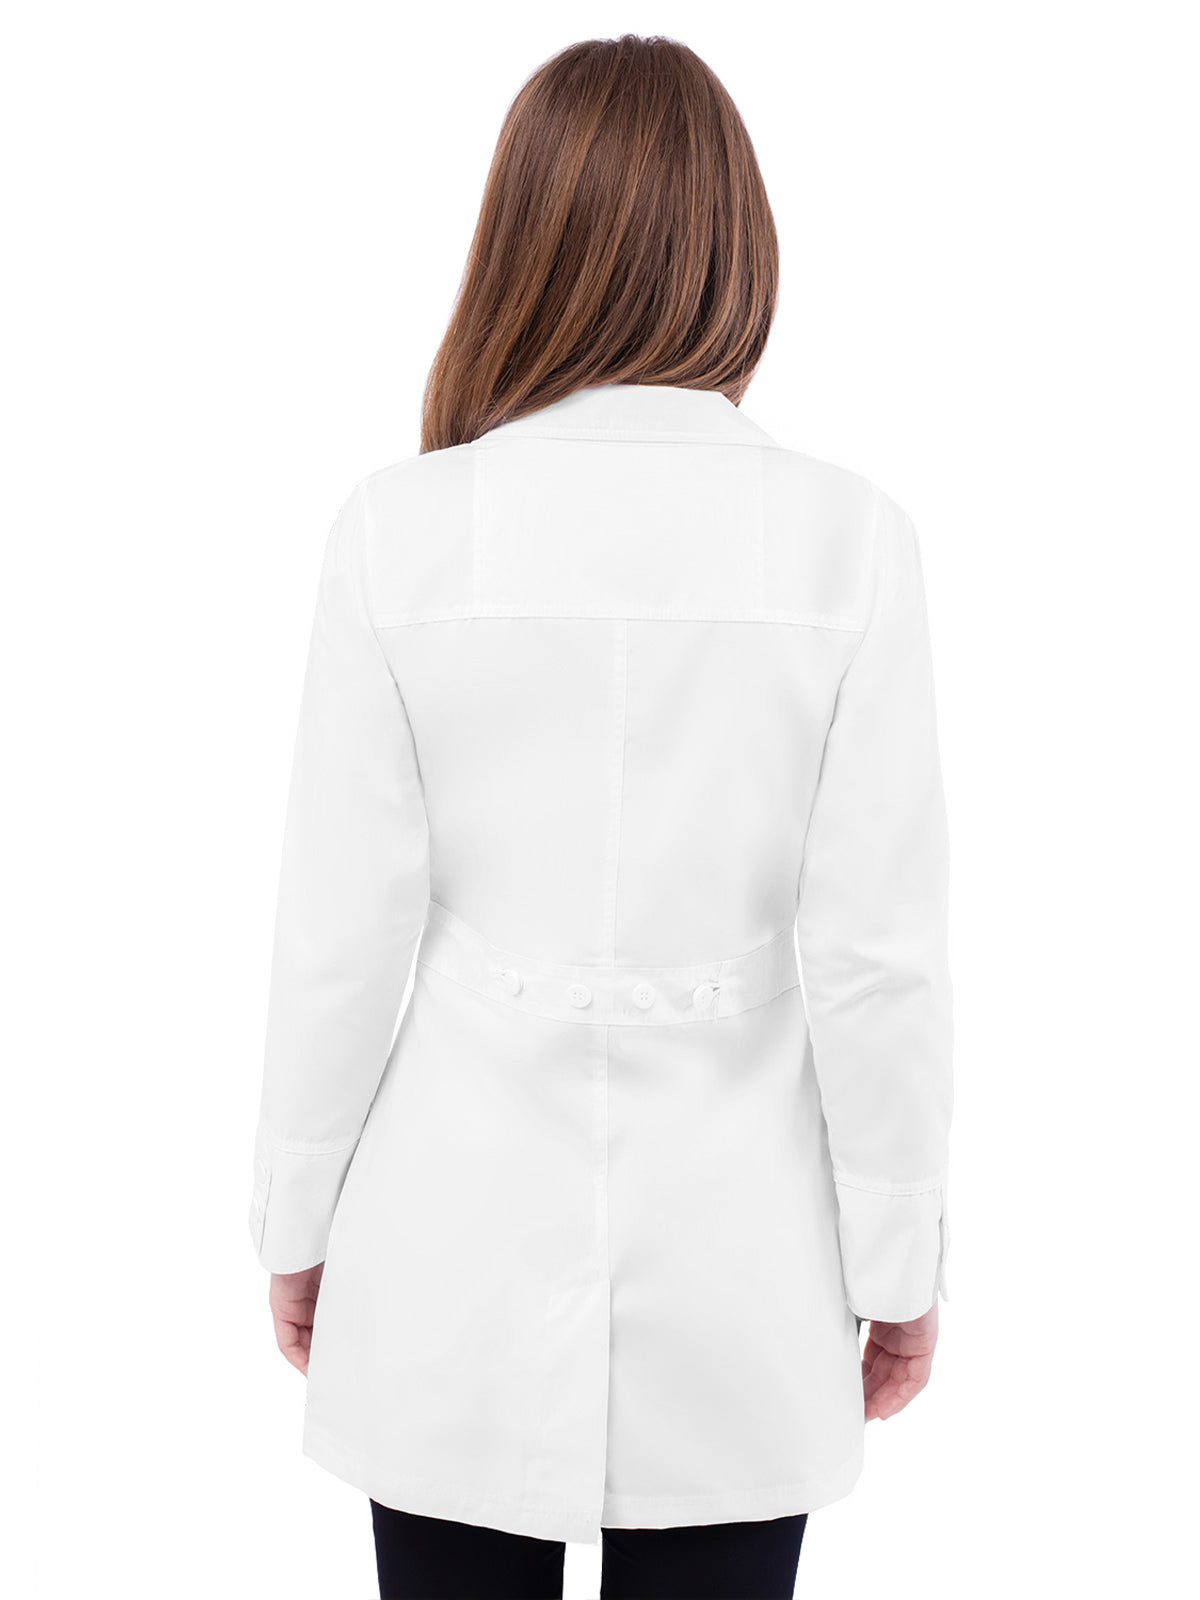 Women's Multi-Pocket 32" Perfection Lab Coat